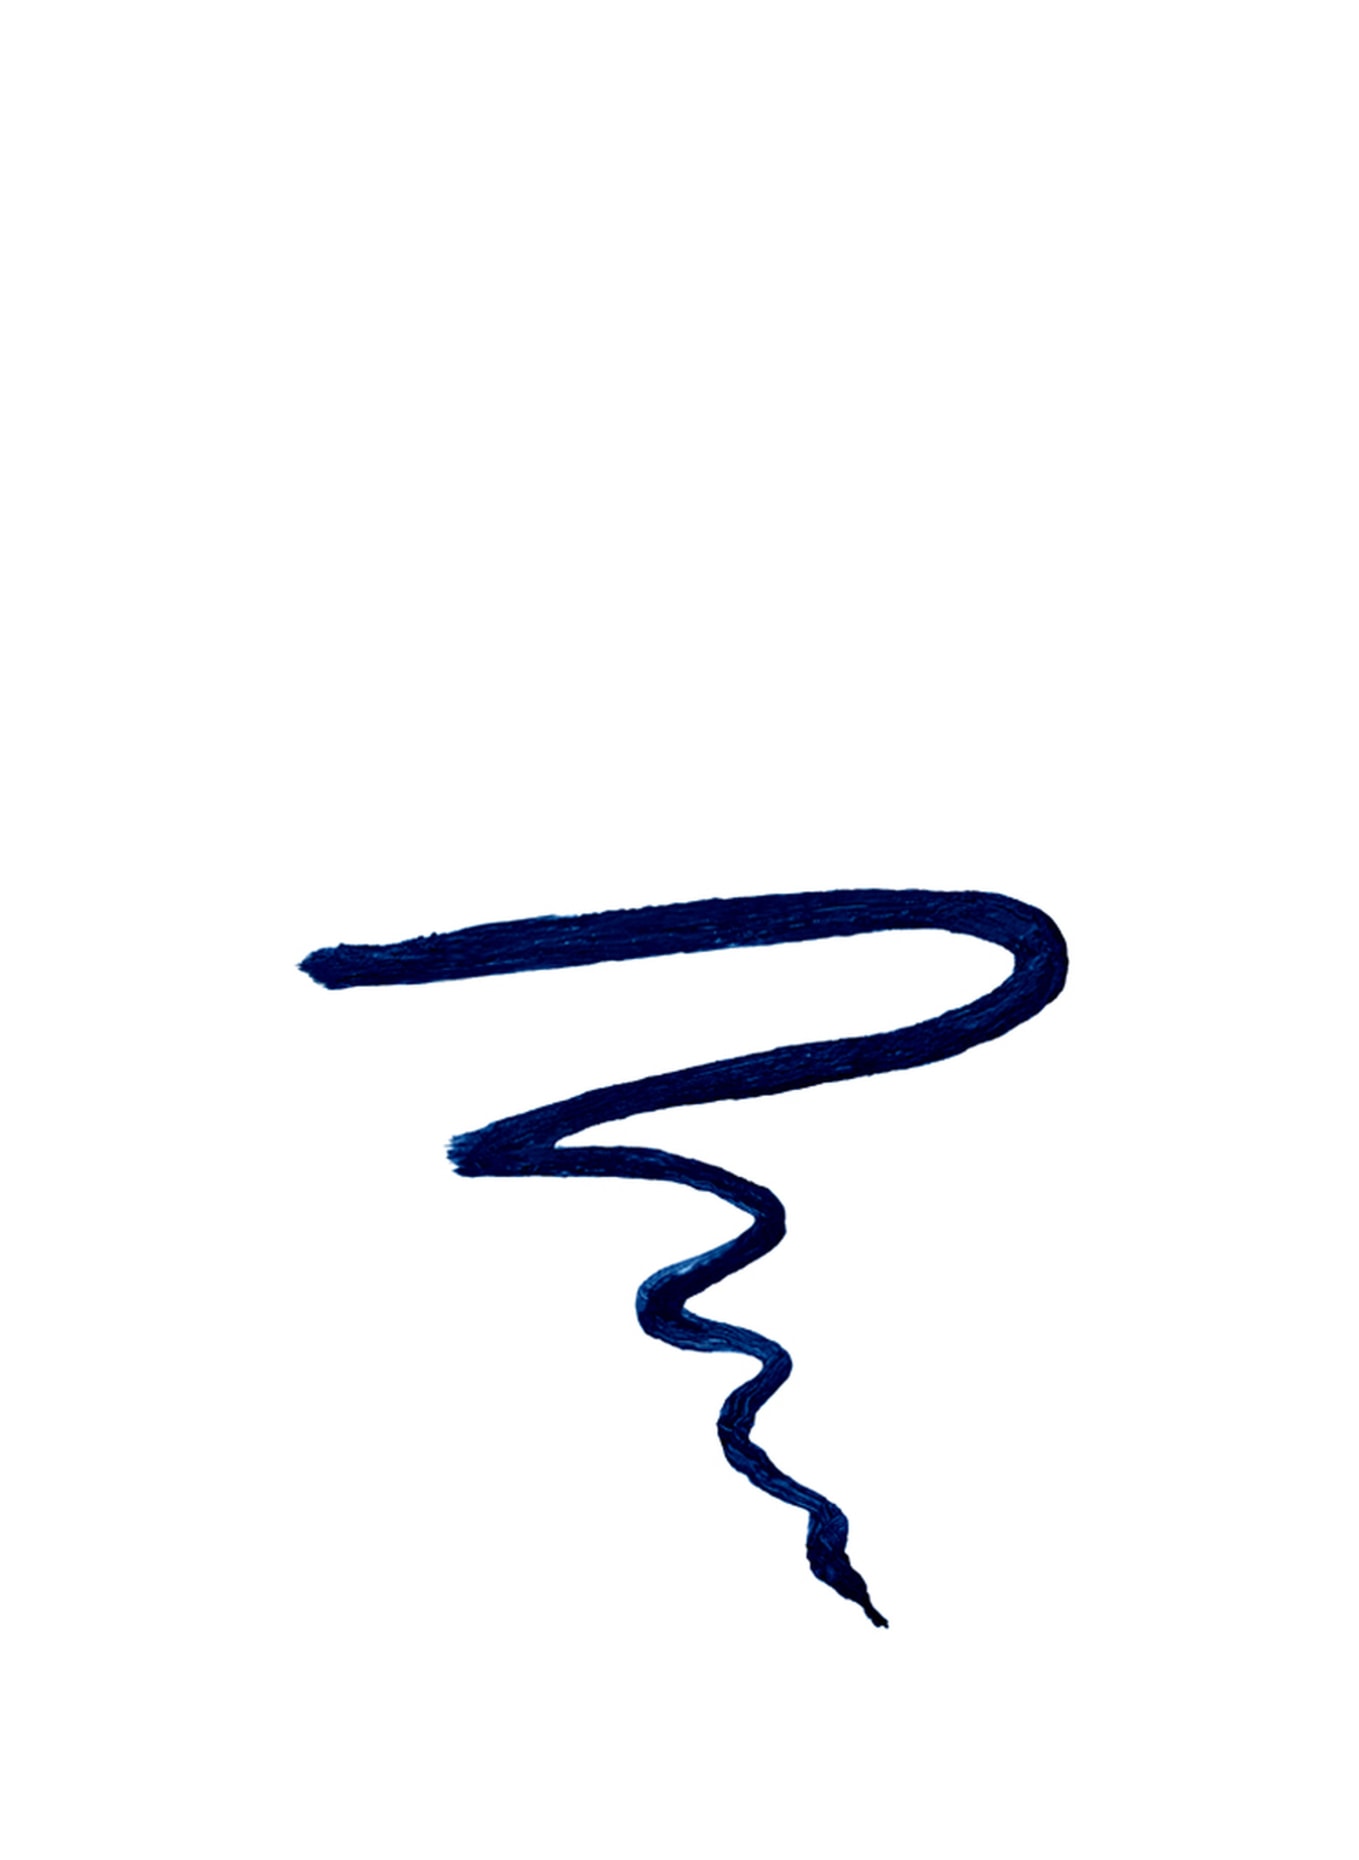 SHISEIDO MICROLINER INK, Farbe: 04 NAVY (Bild 2)